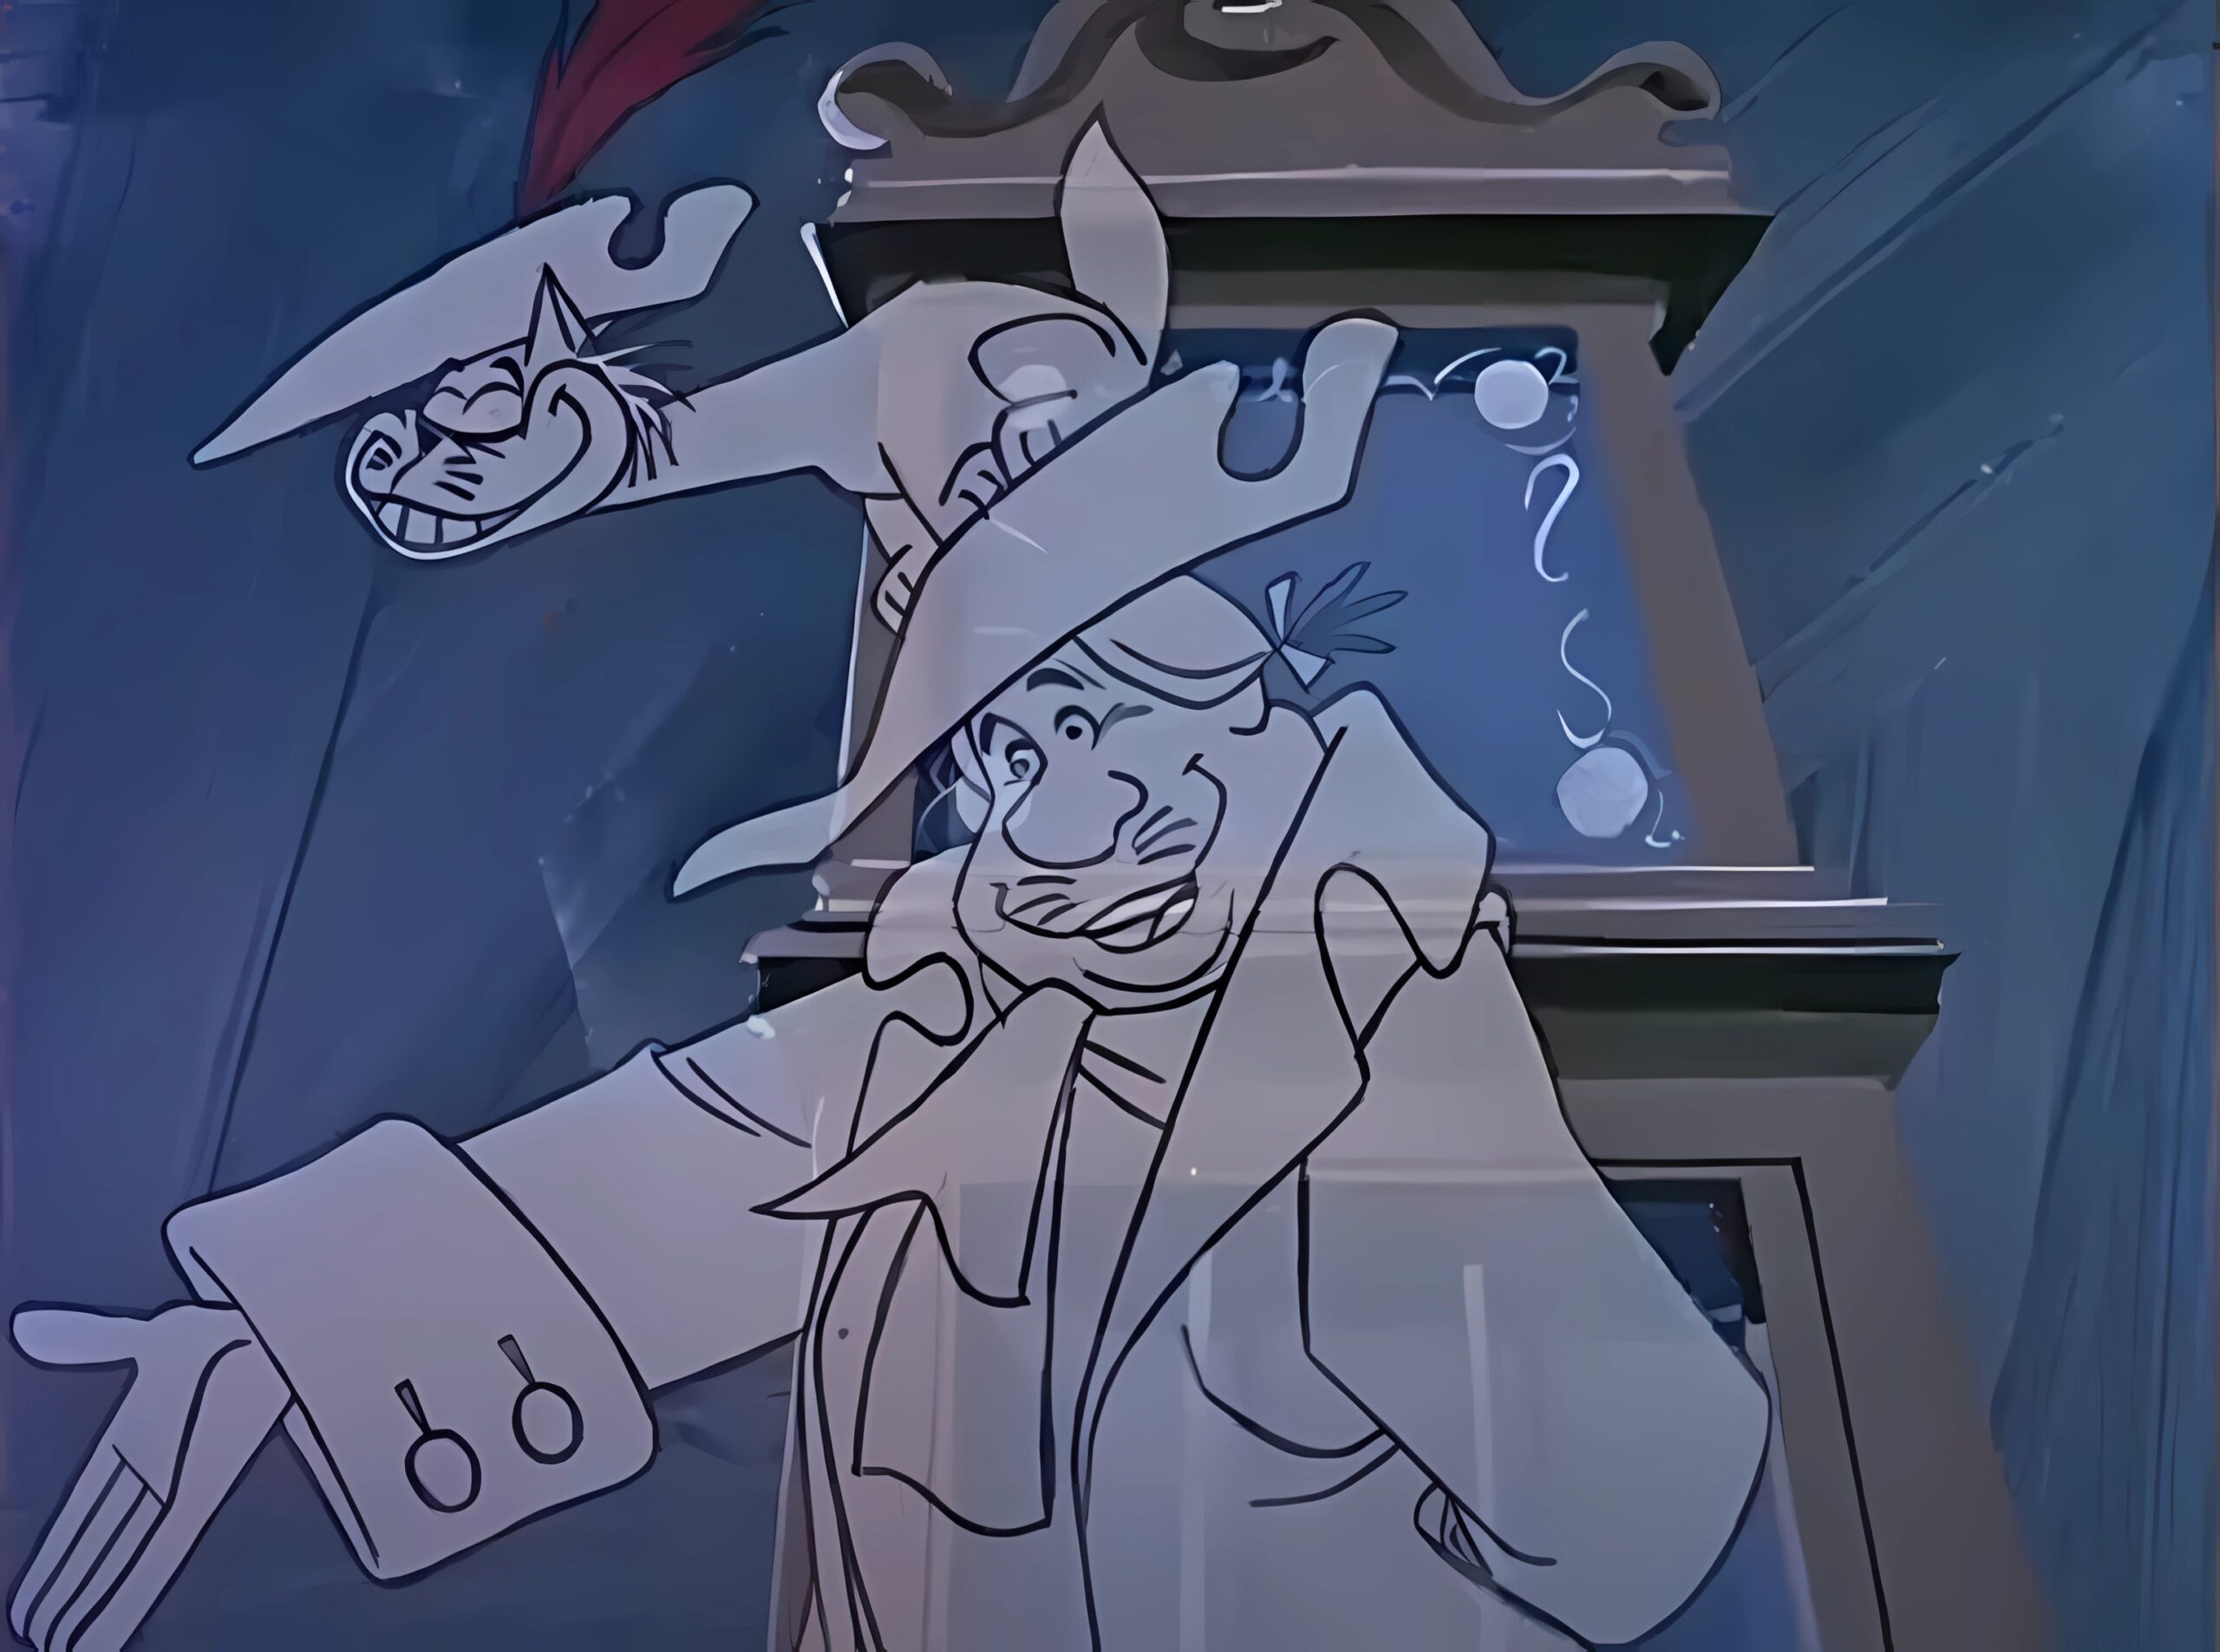 Il fantasma bizzarro / The Funky Phantom – La serie animata del 1971